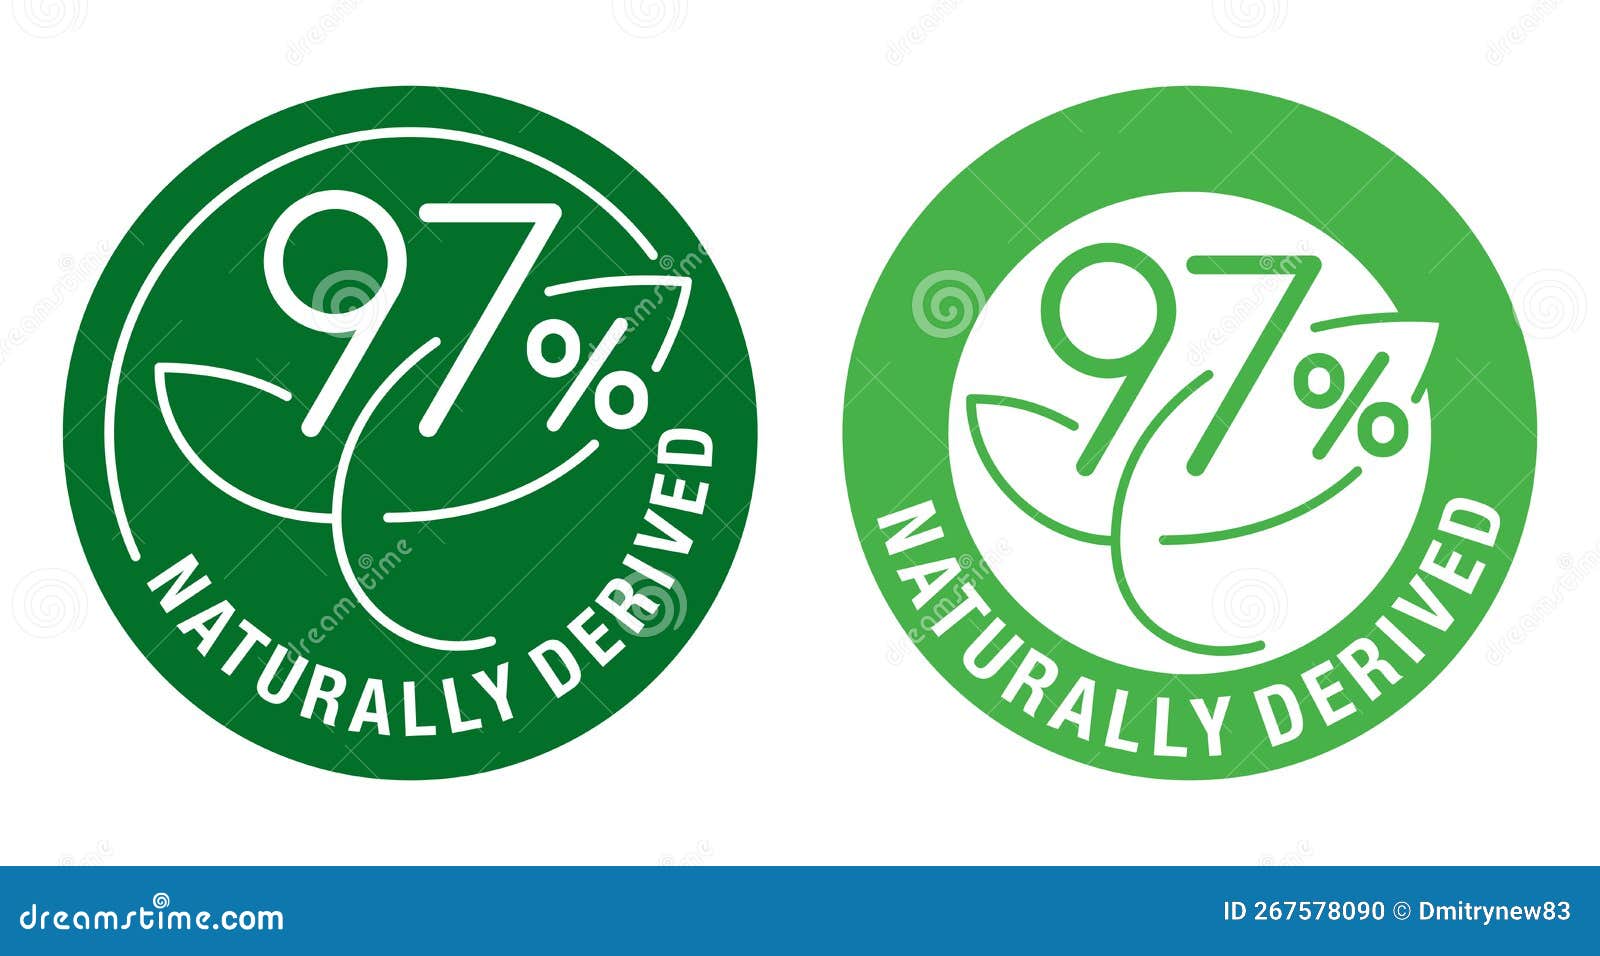 badge - 97 percents naturally derived